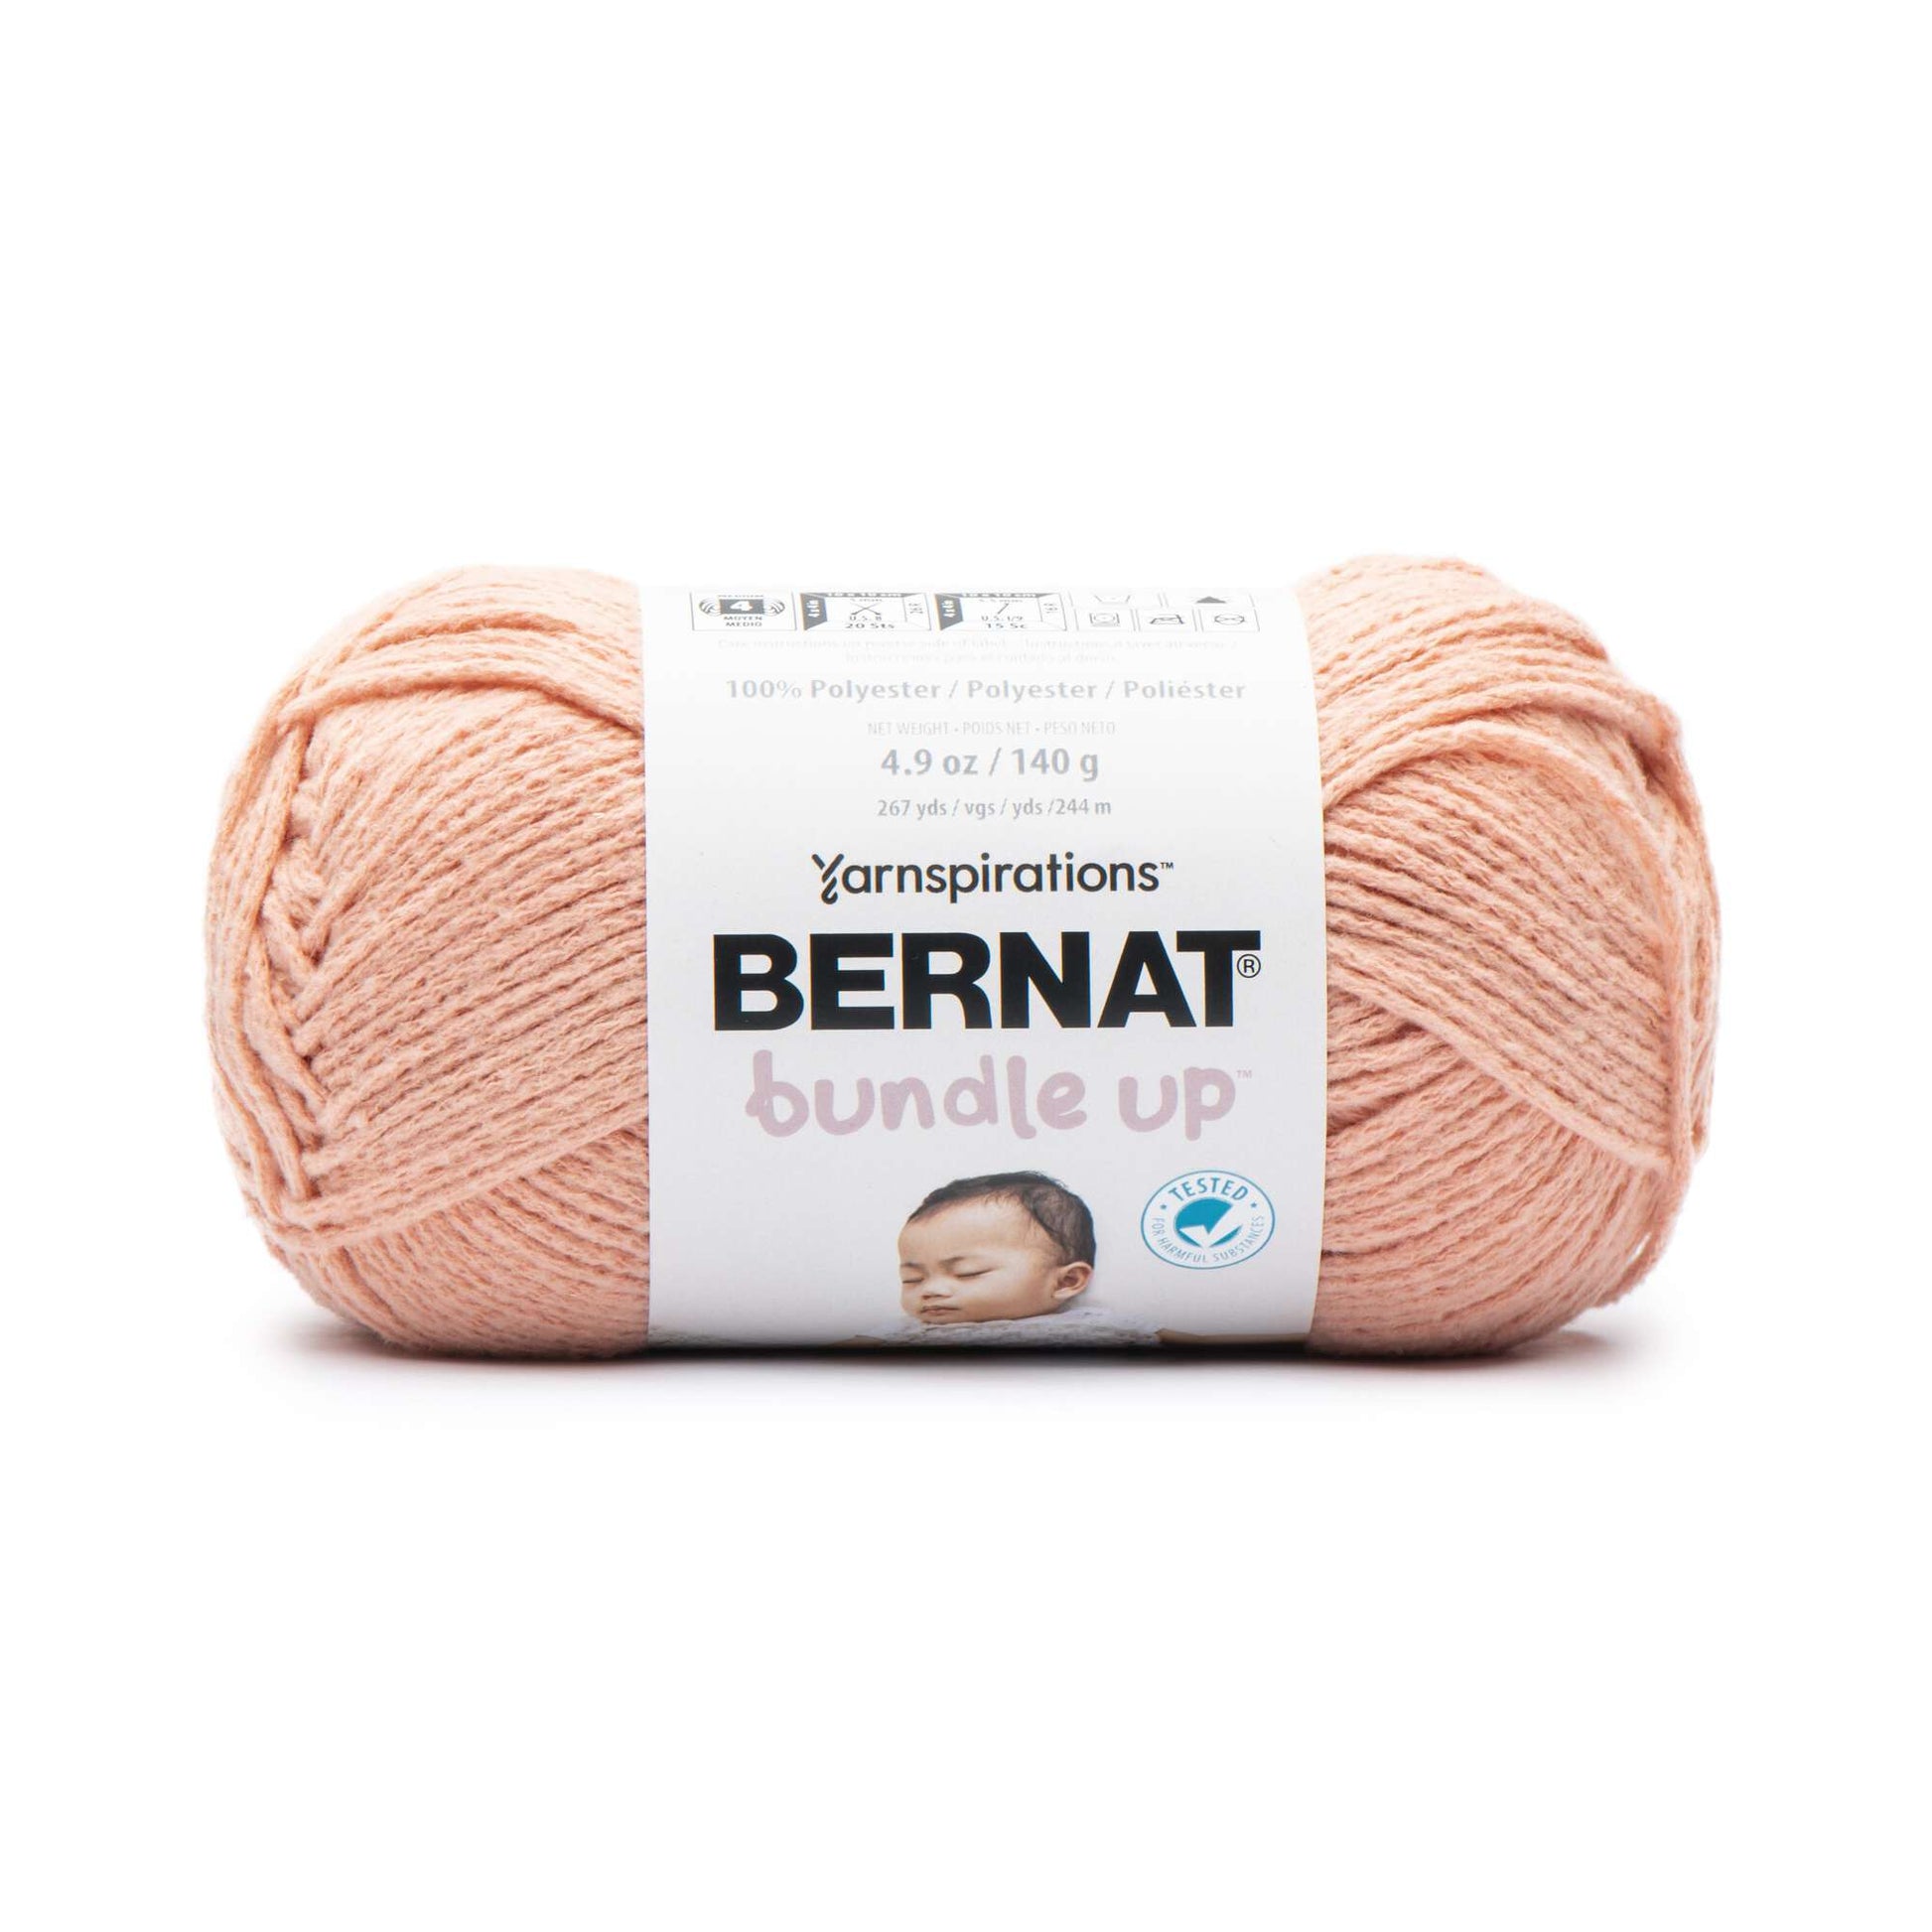 Bernat Baby Blanket Sparkle #6 Super Bulky Polyester Yarn, Hot Pink 10.5oz/300g, 220 Yards (4 Pack)